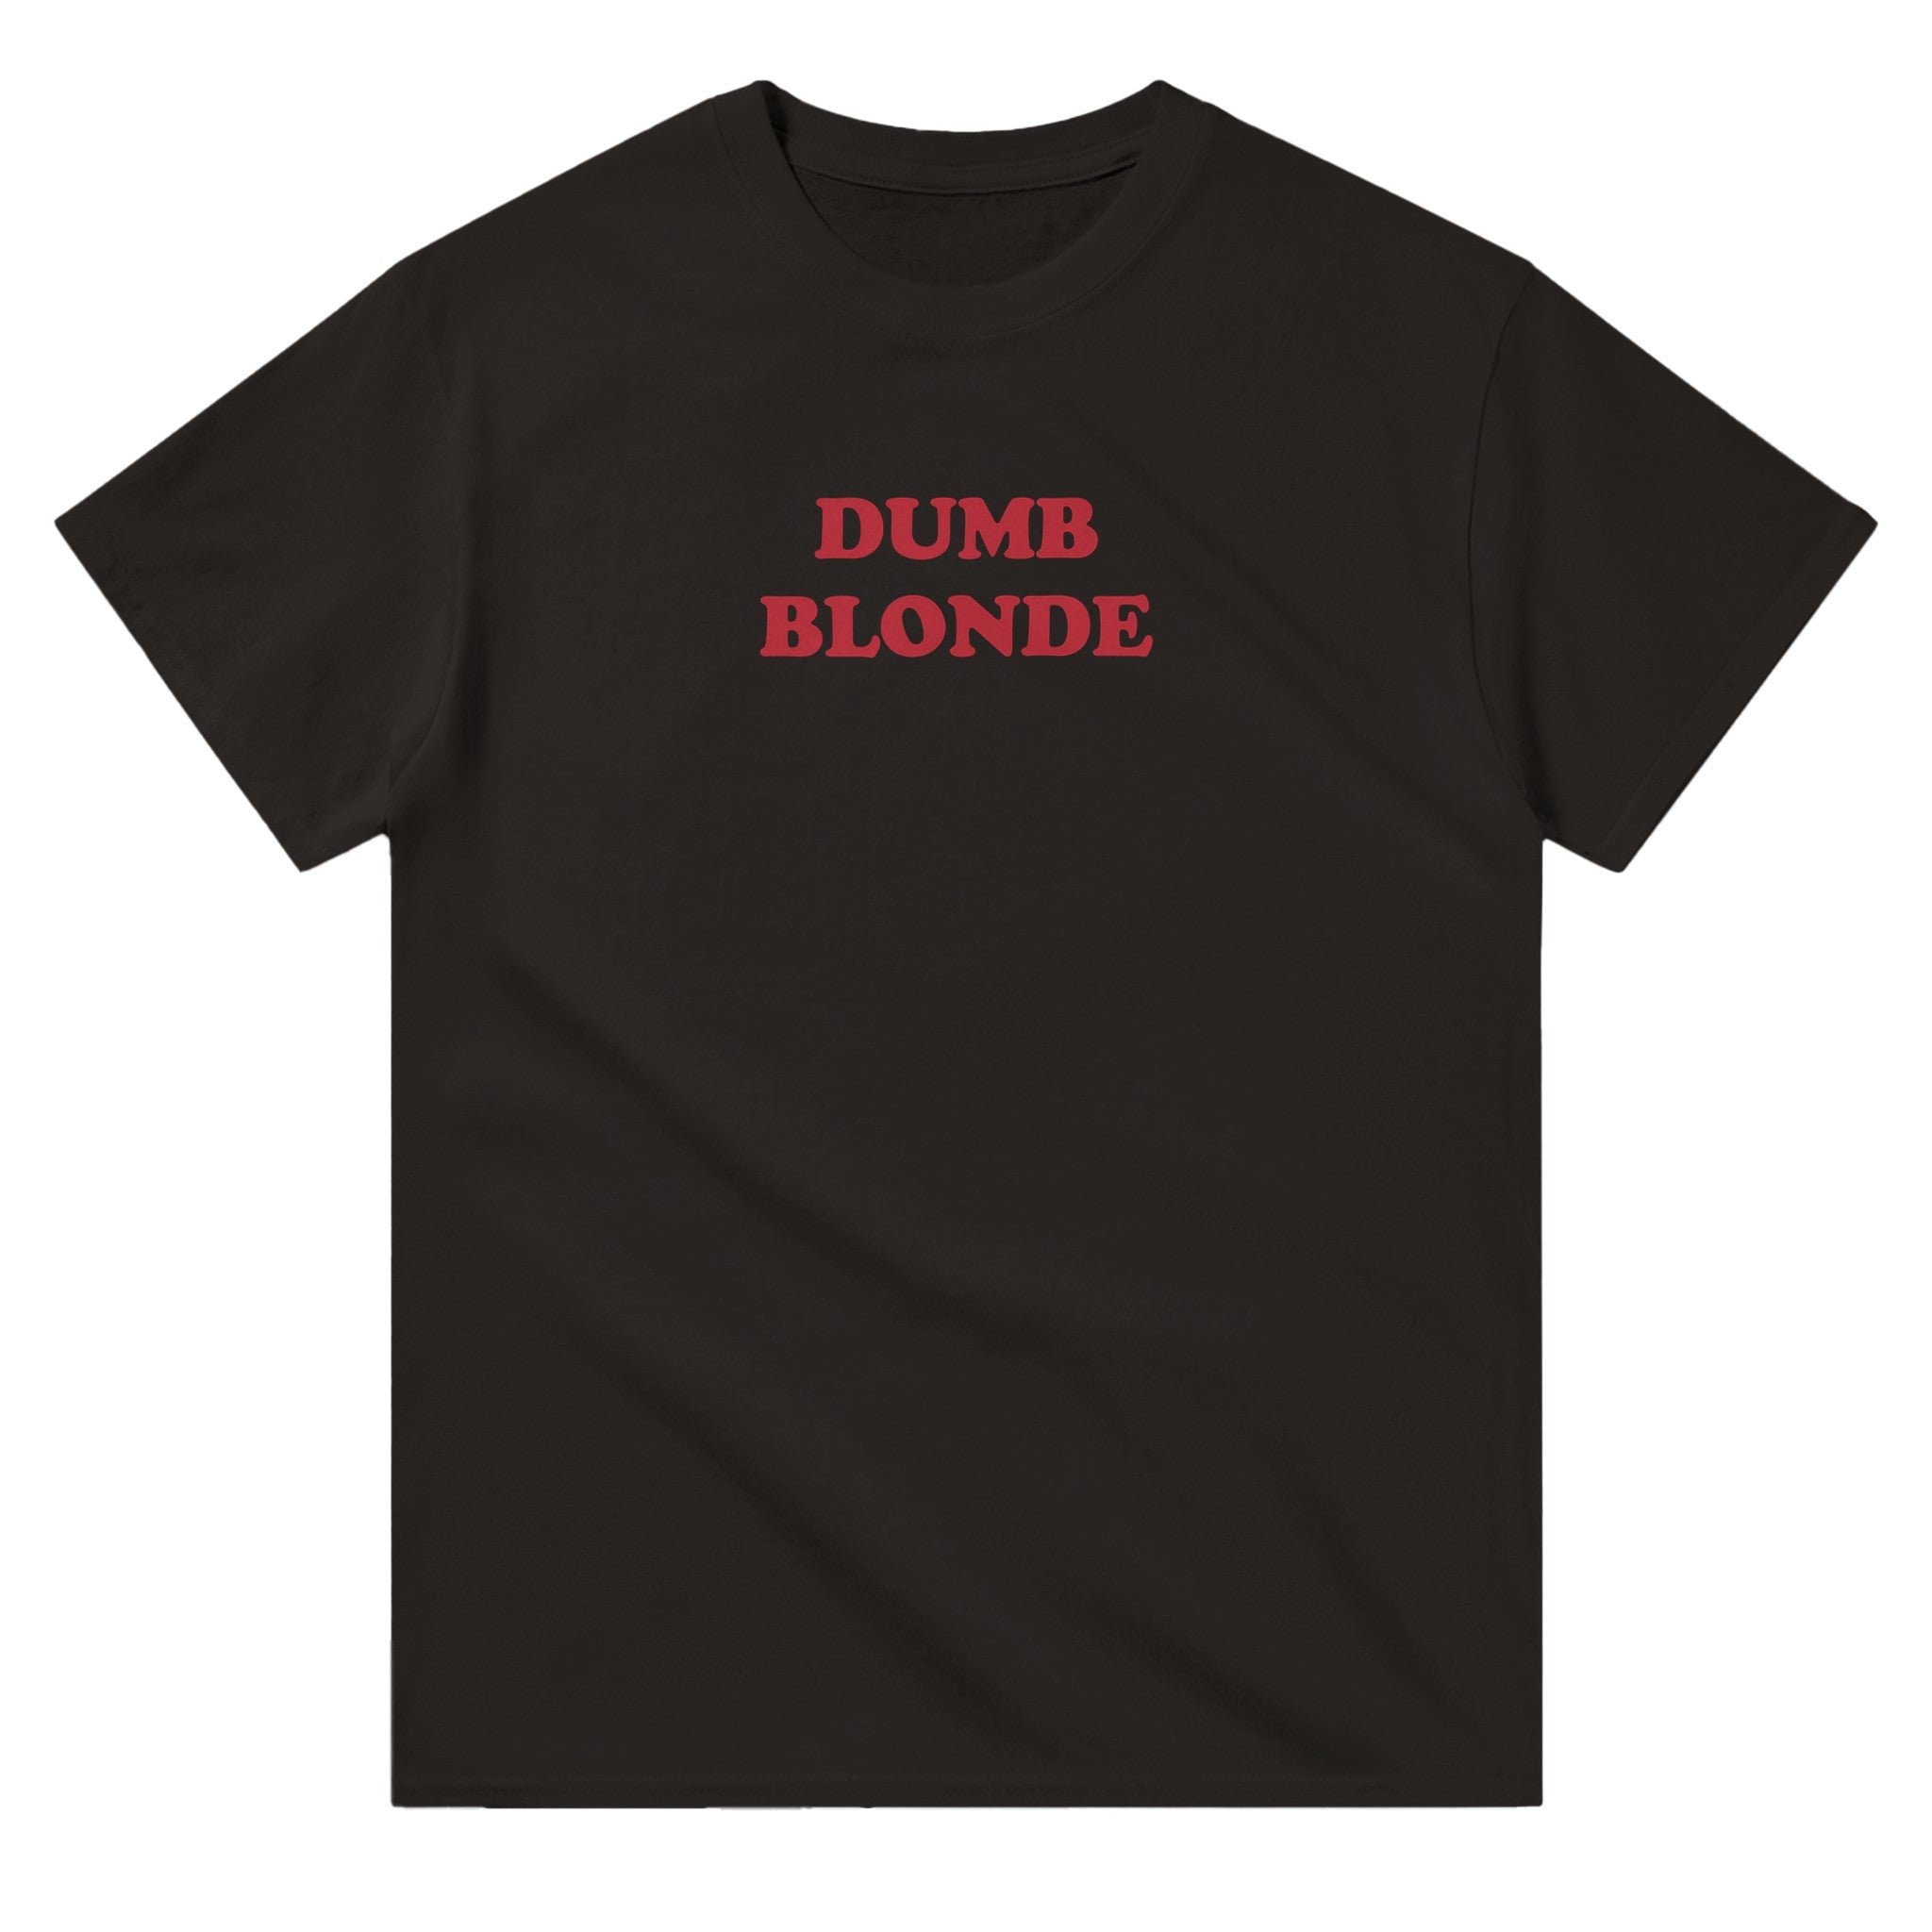 'Dumb Blonde' classic tee - In Print We Trust